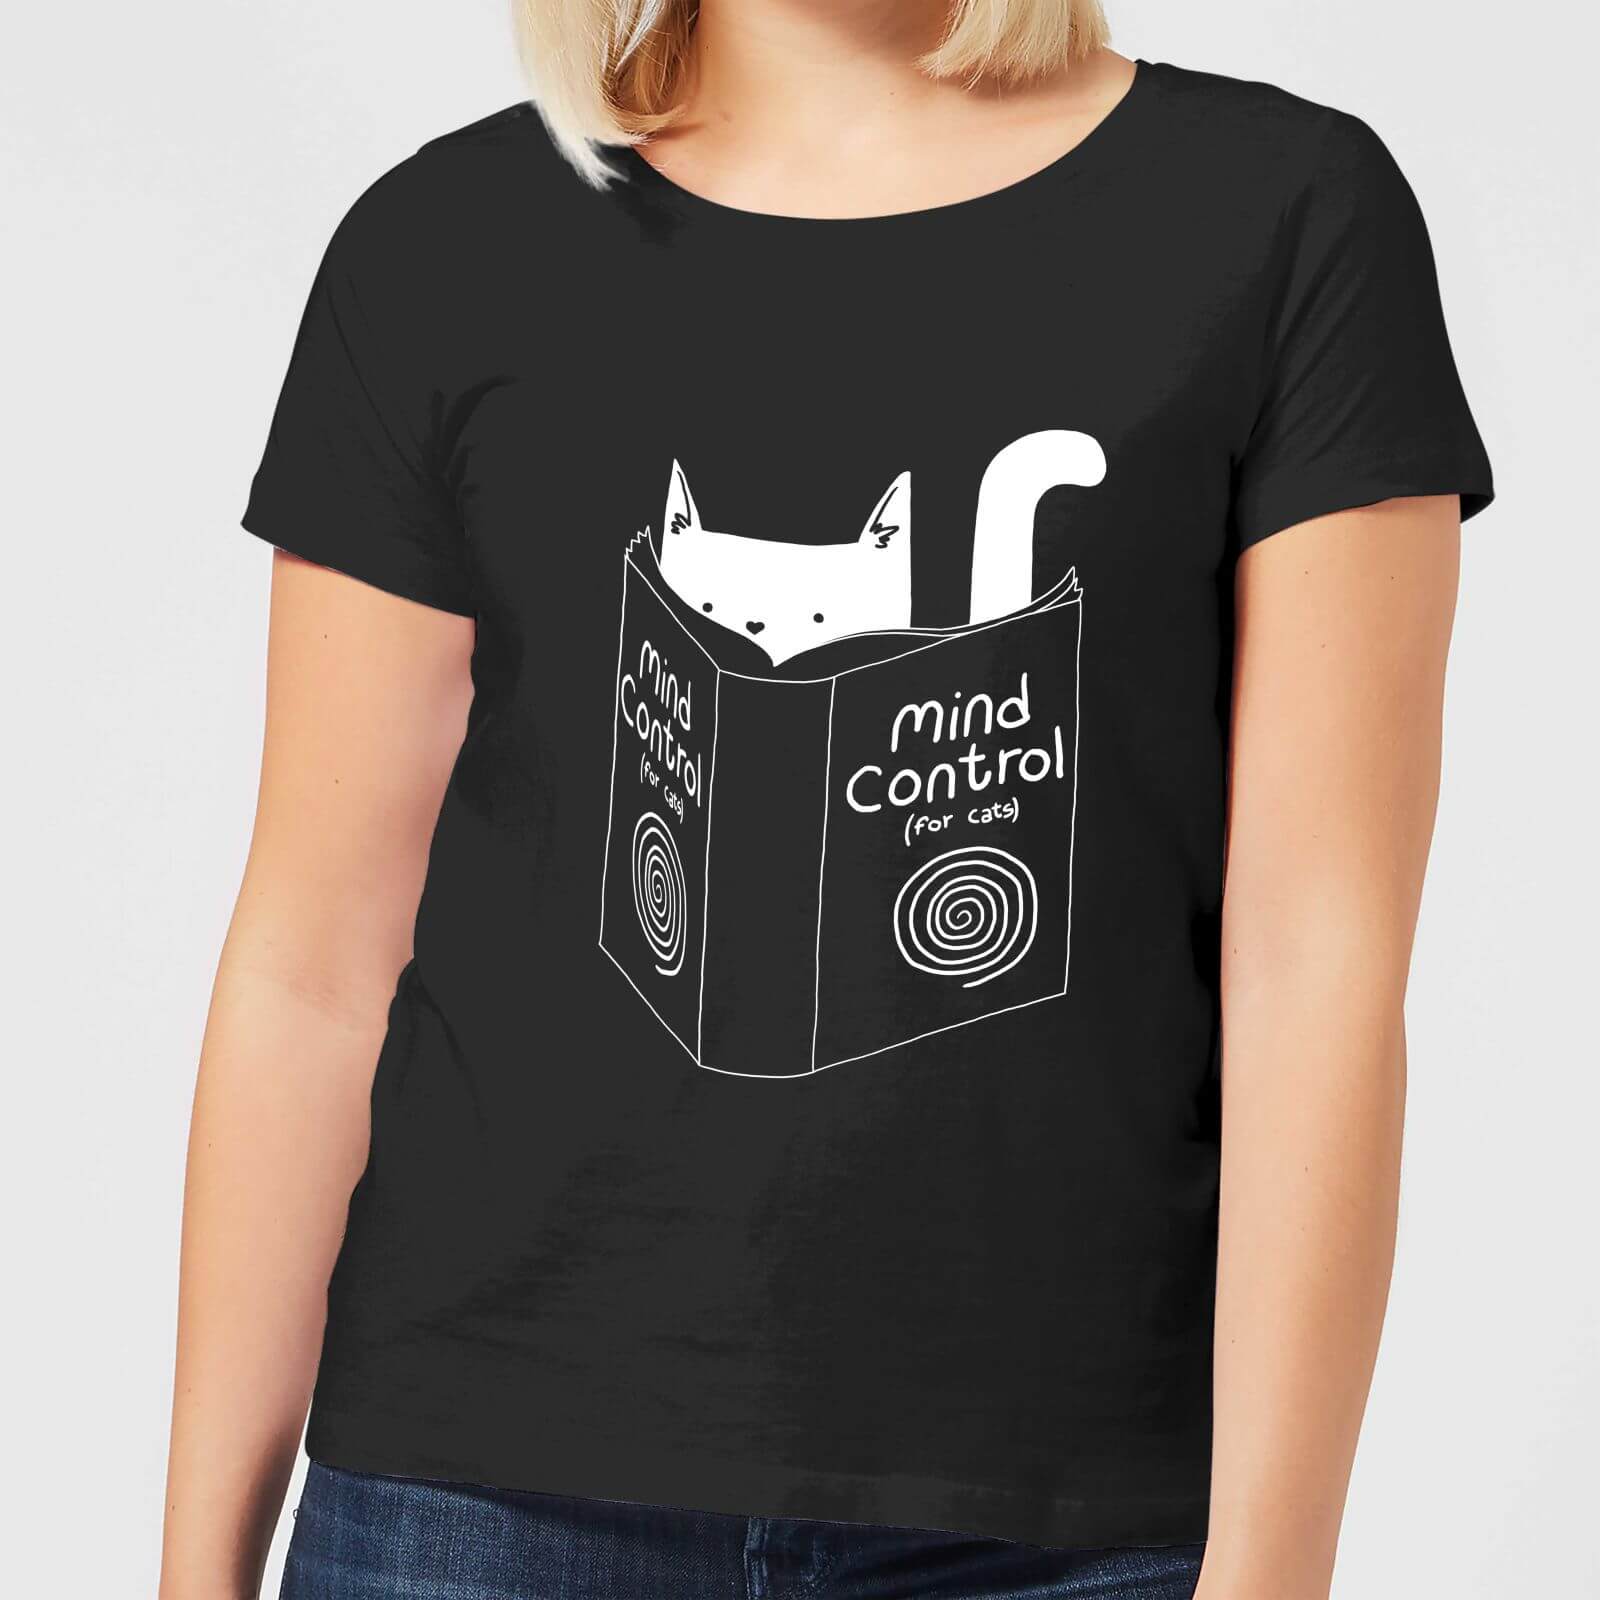 Mind Control for Cats Women's T-Shirt - Black - S - Black